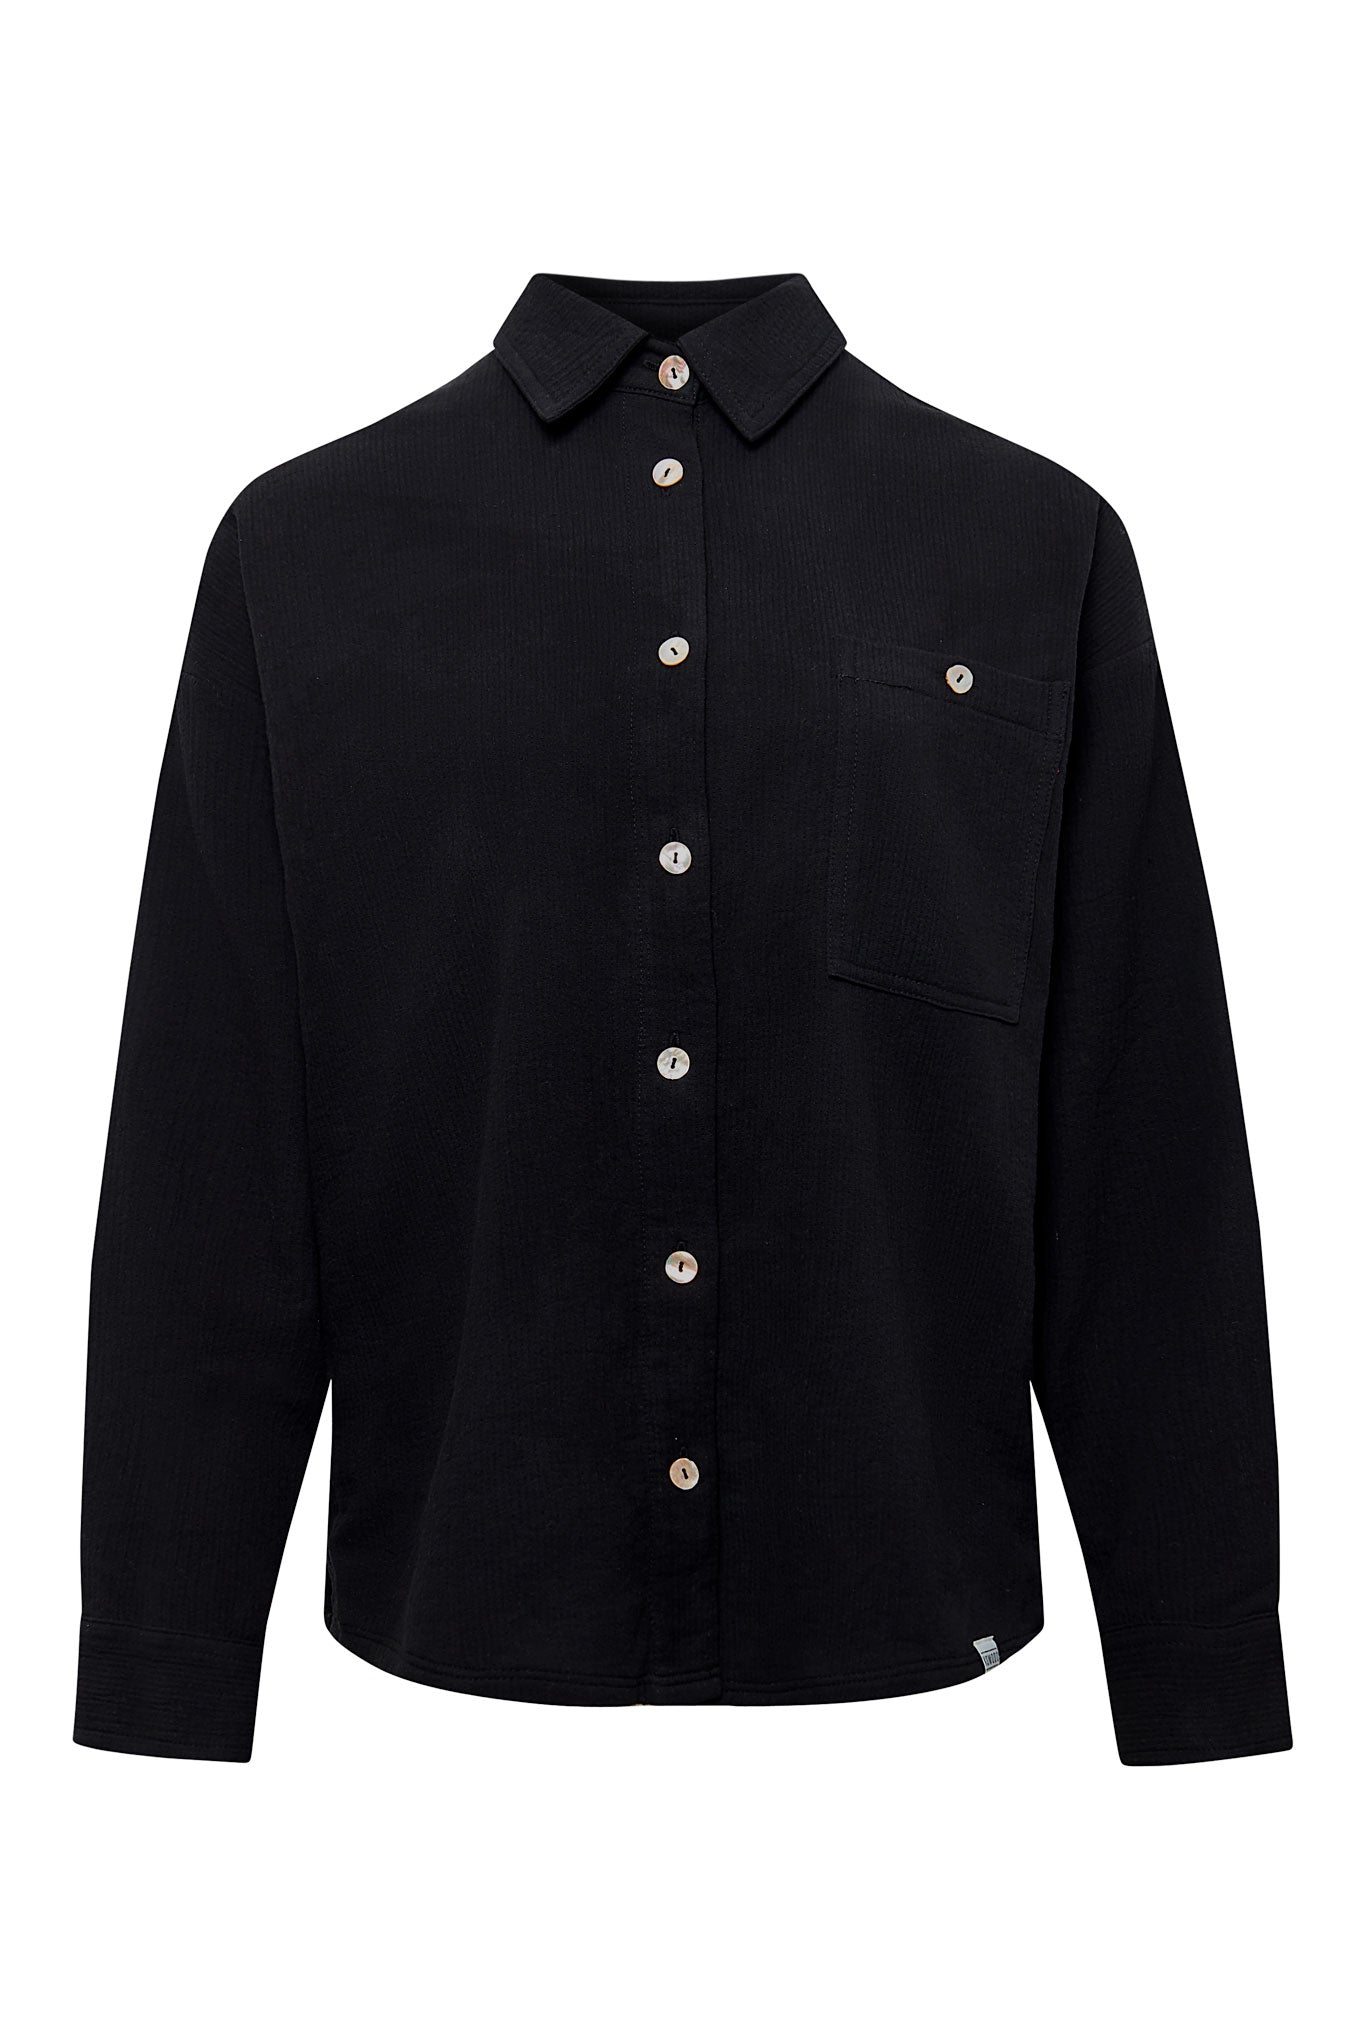 Black blouse HANAKO made from 100% organic cotton by Komodo